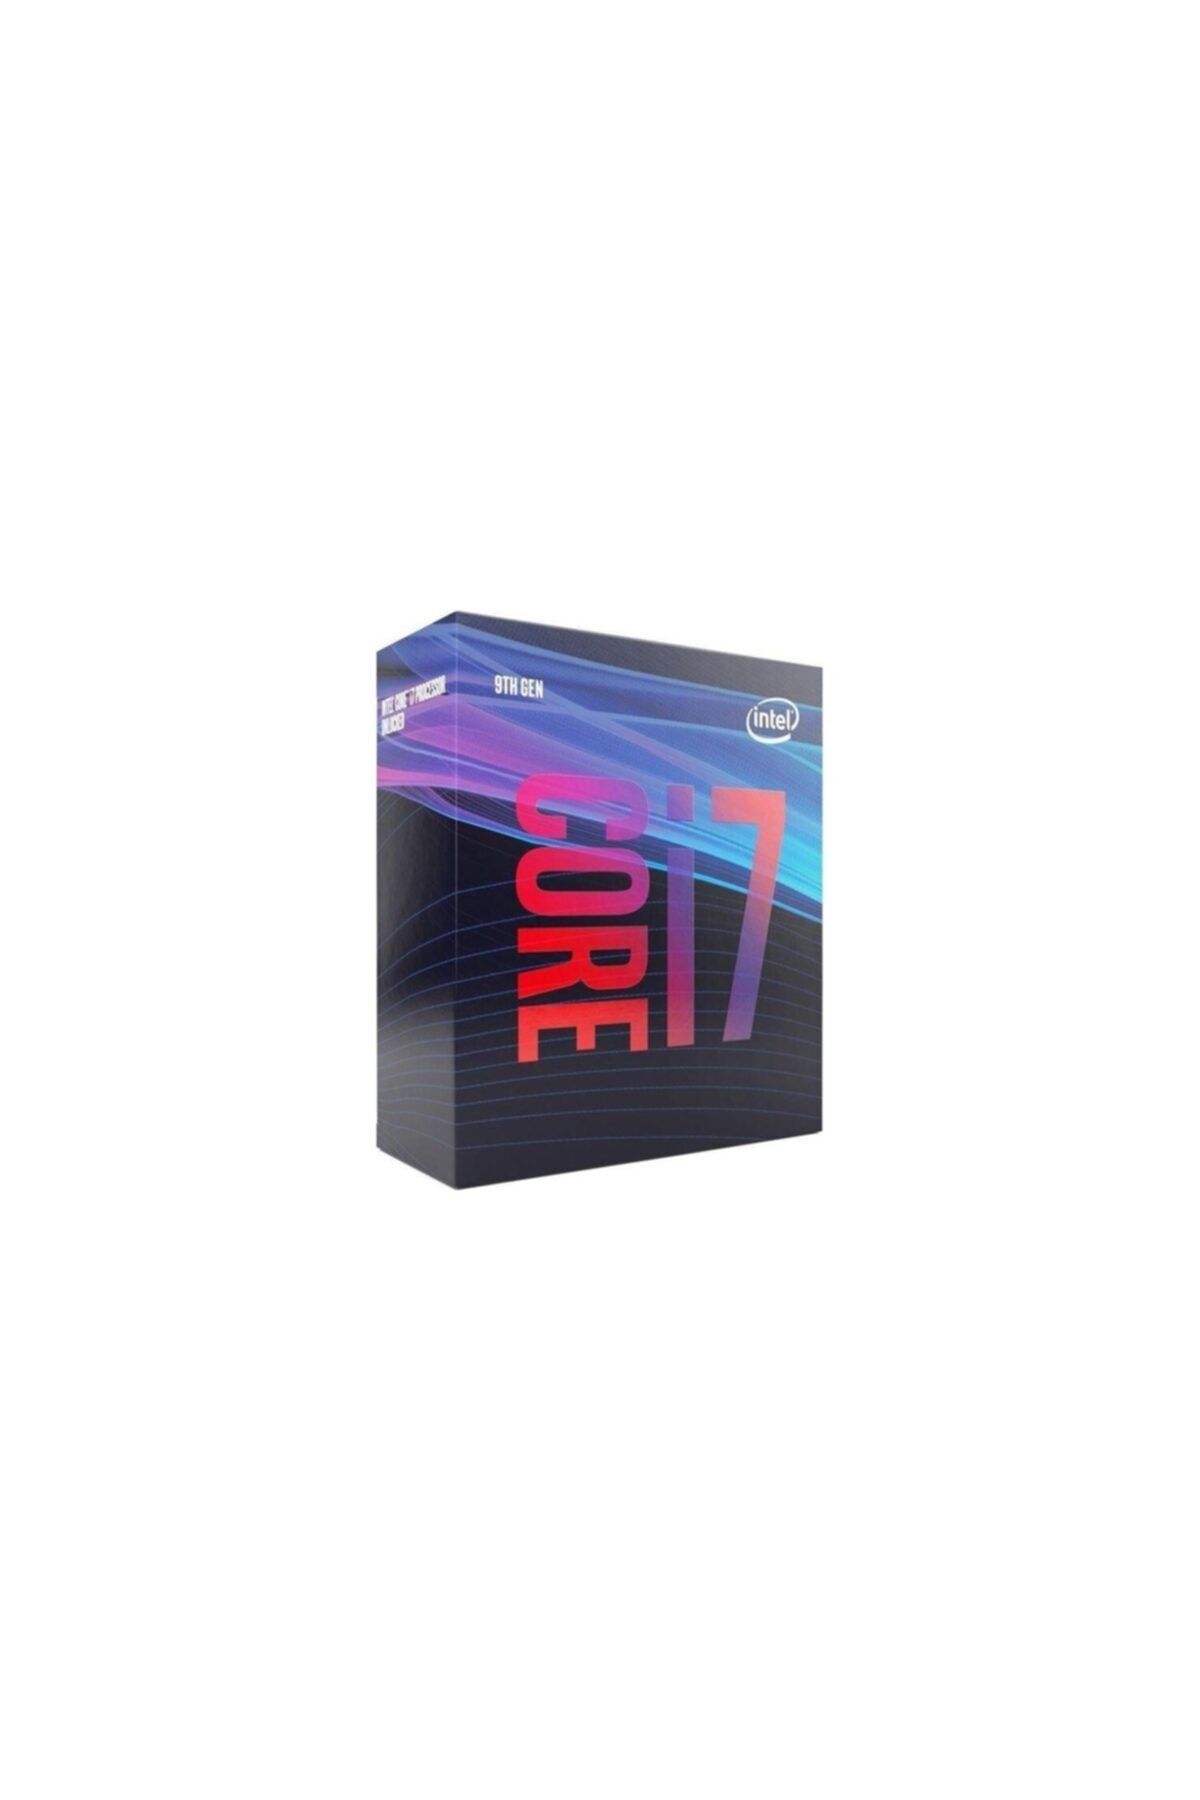 Intel Core I7 9700 3ghz 12mb Cache Lga1151 Hd630 Işlemci